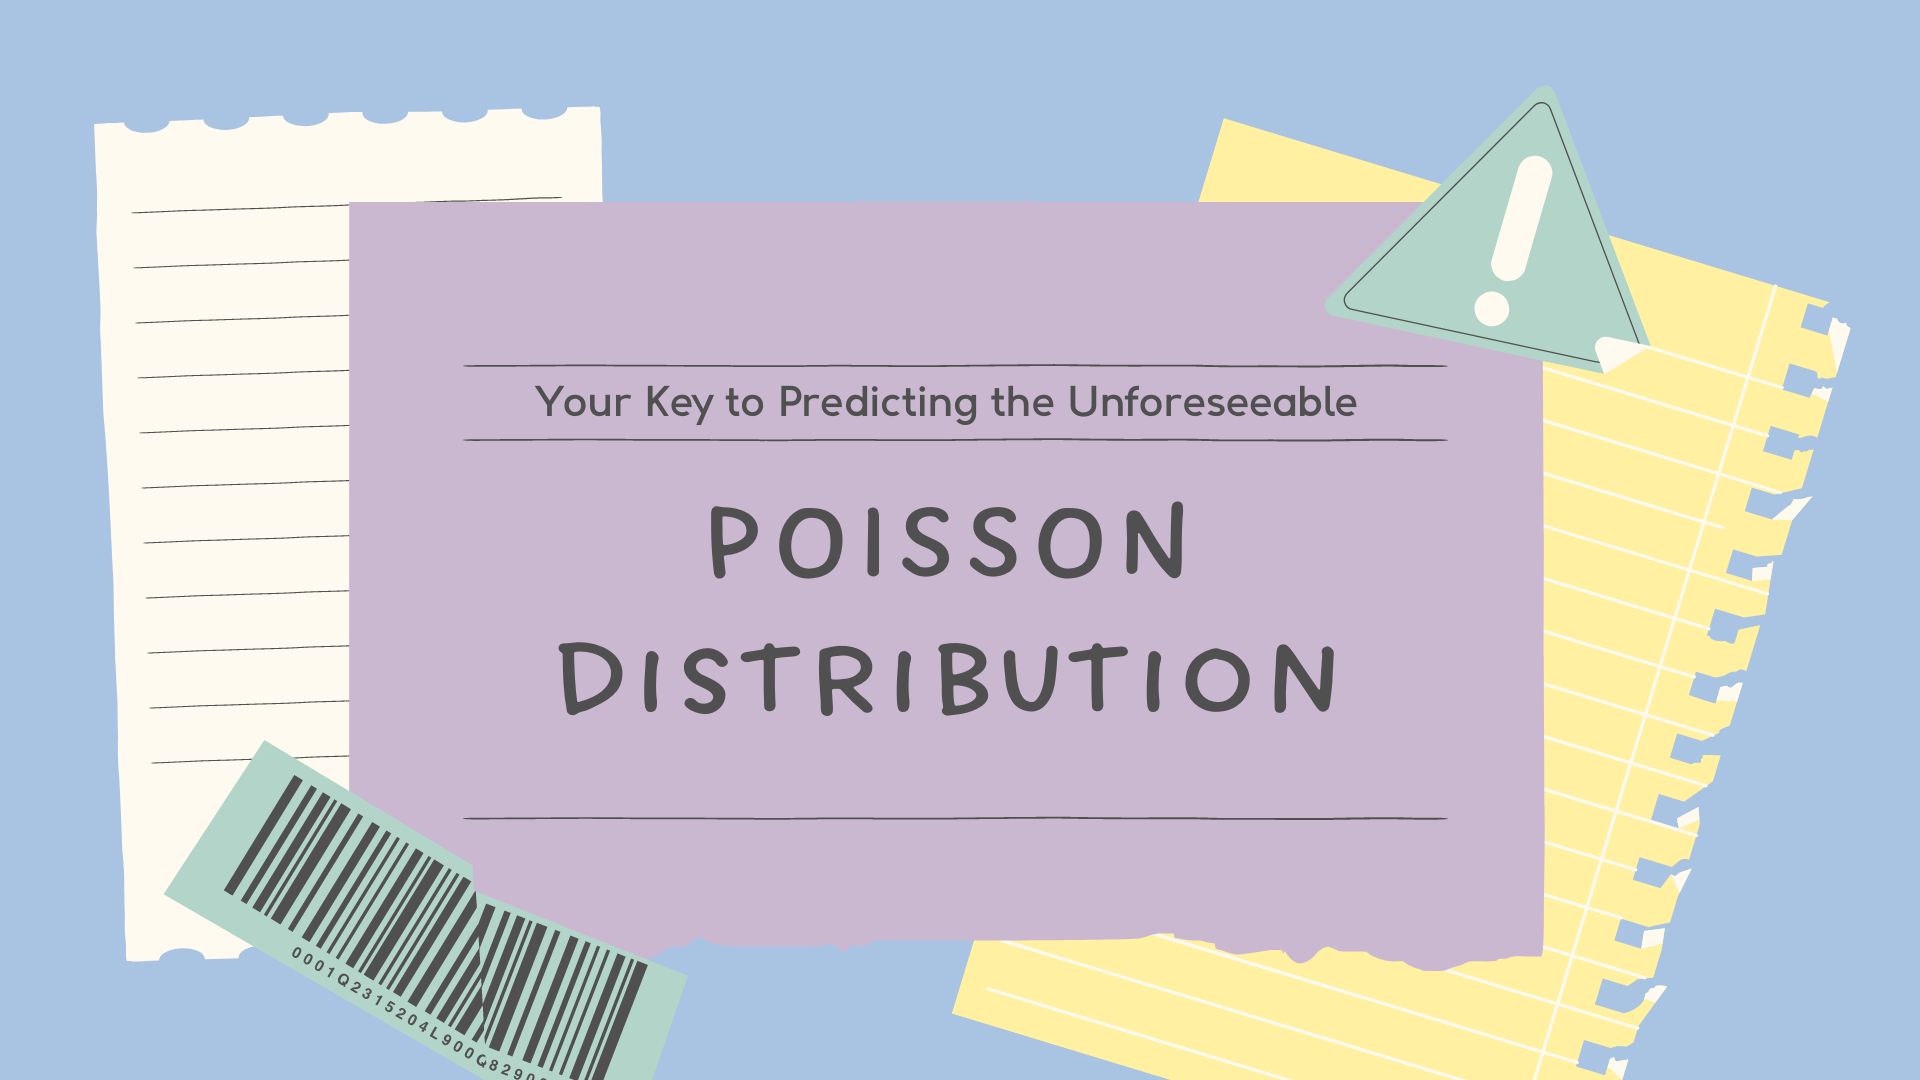 The Poisson Distribution Distribution Cover